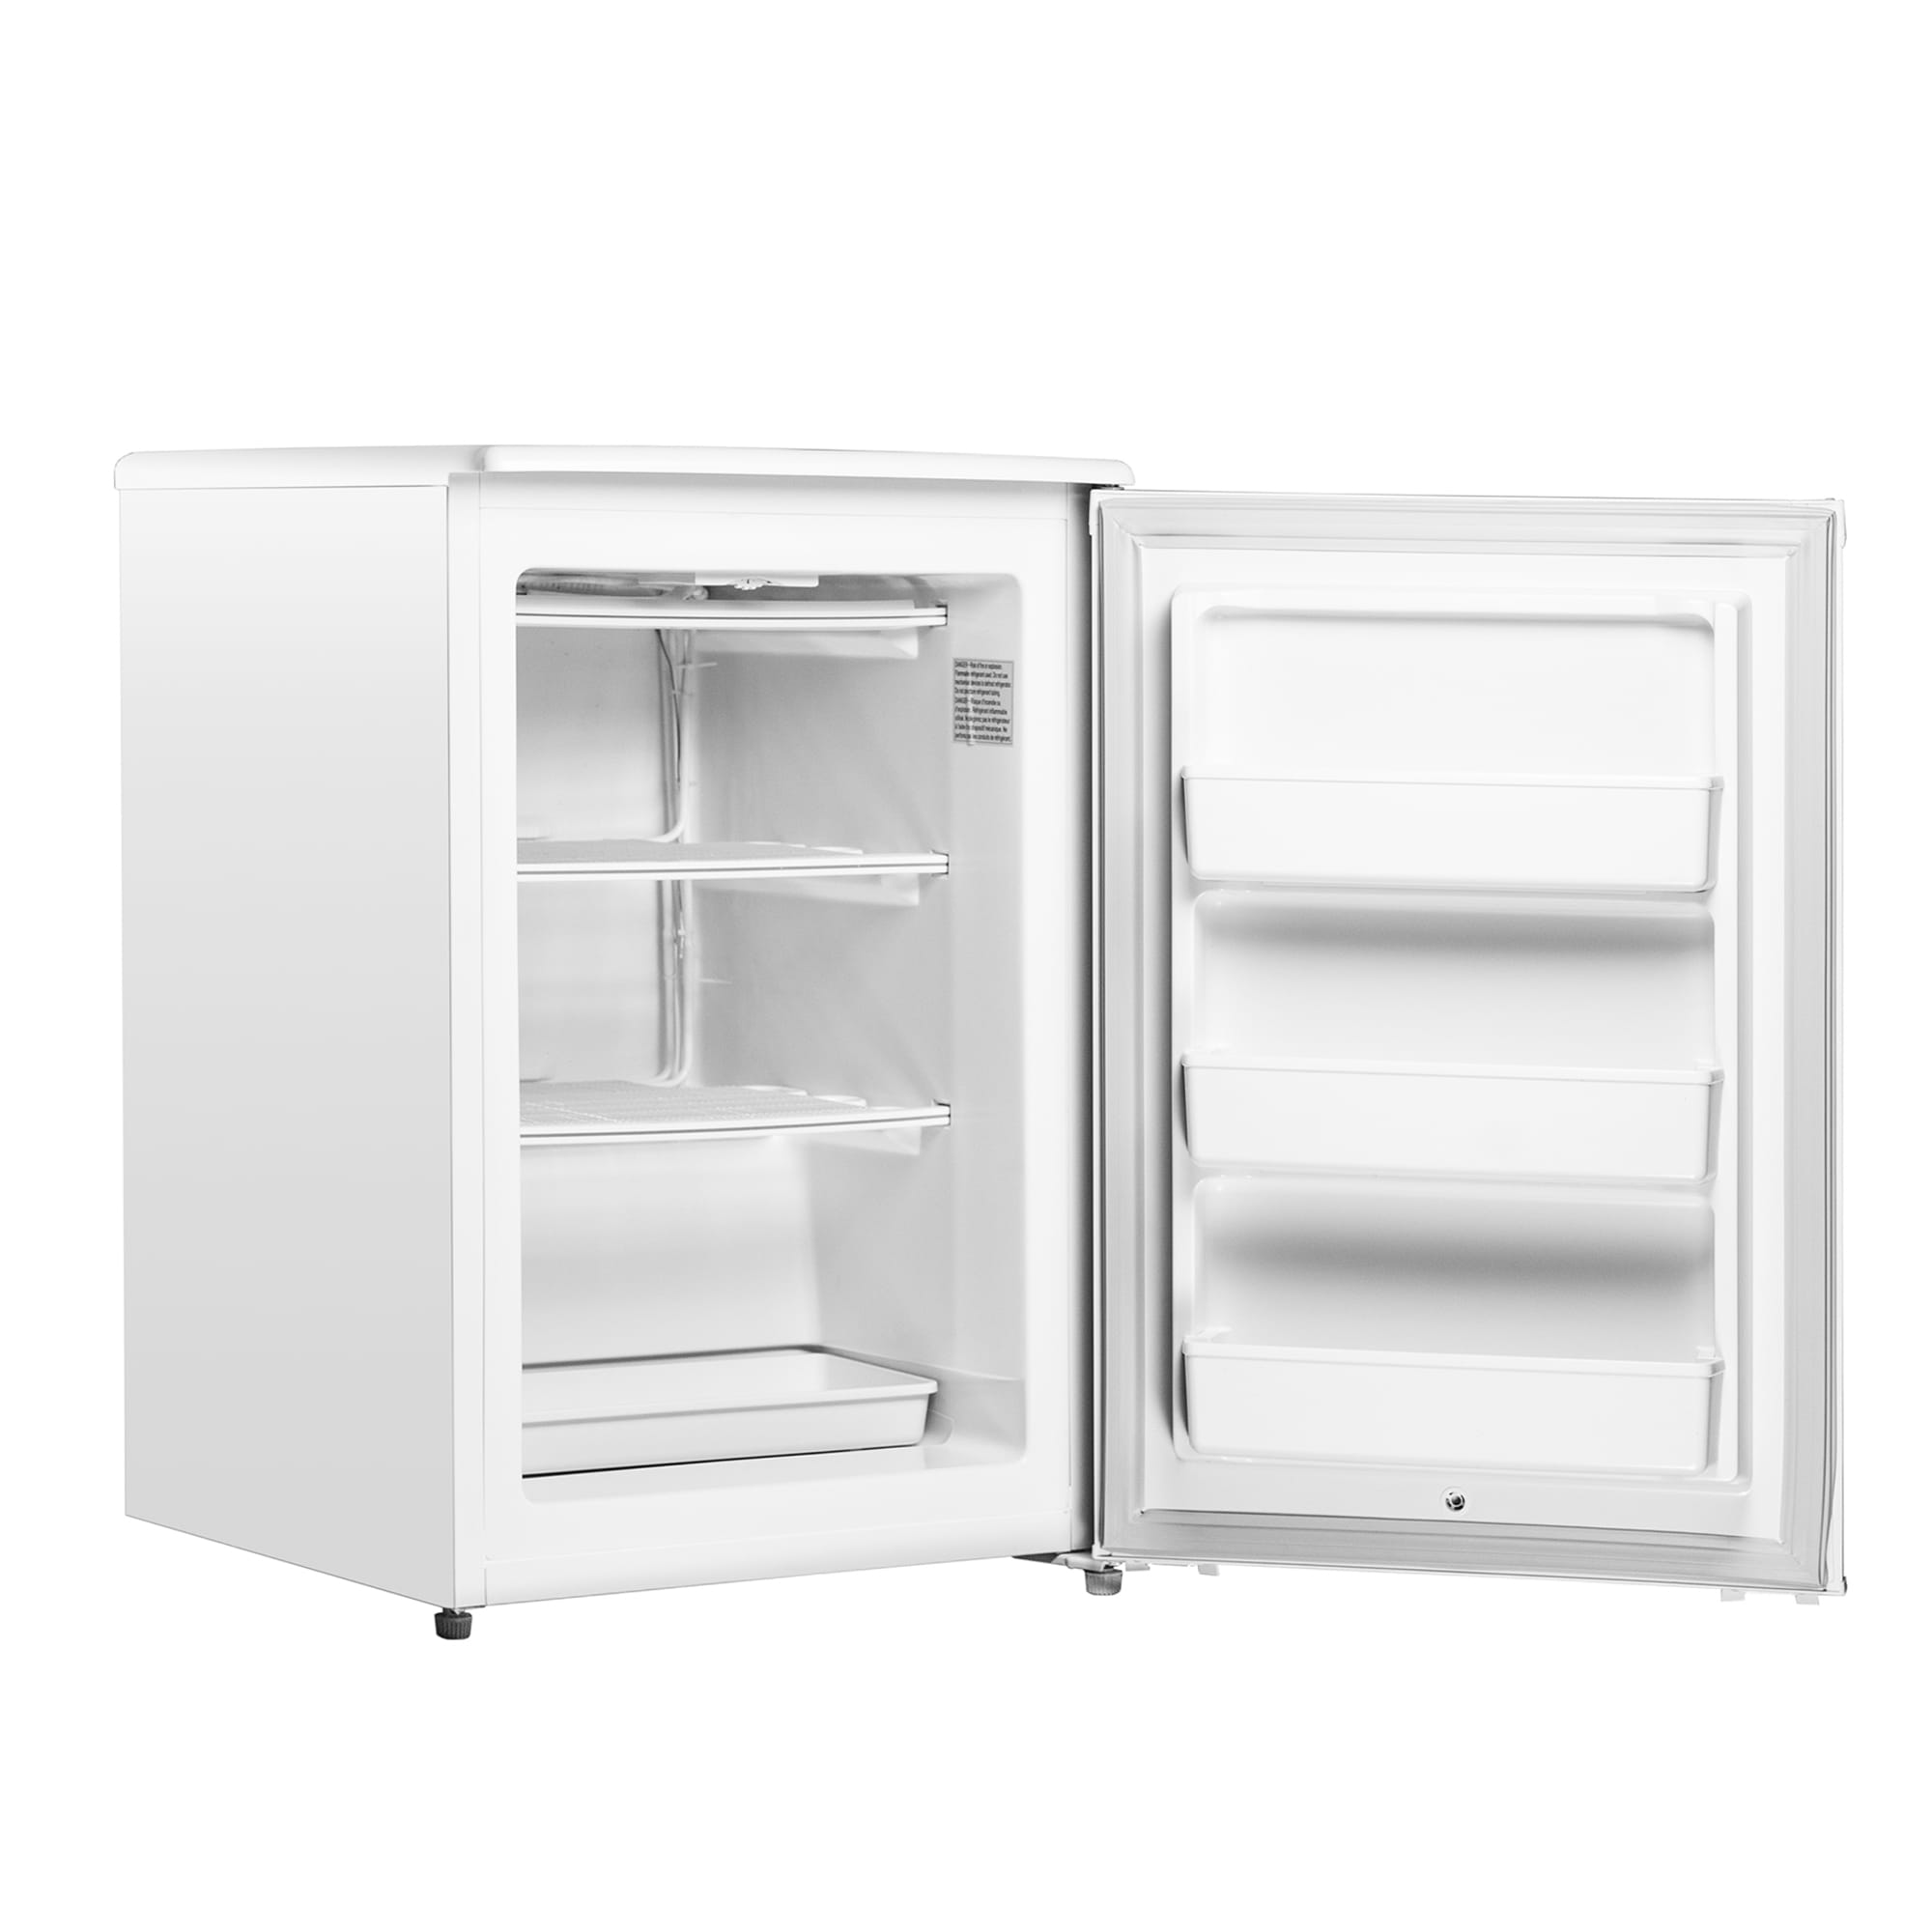 Danby Designer 4.3 cu. ft. Upright Freezer in White